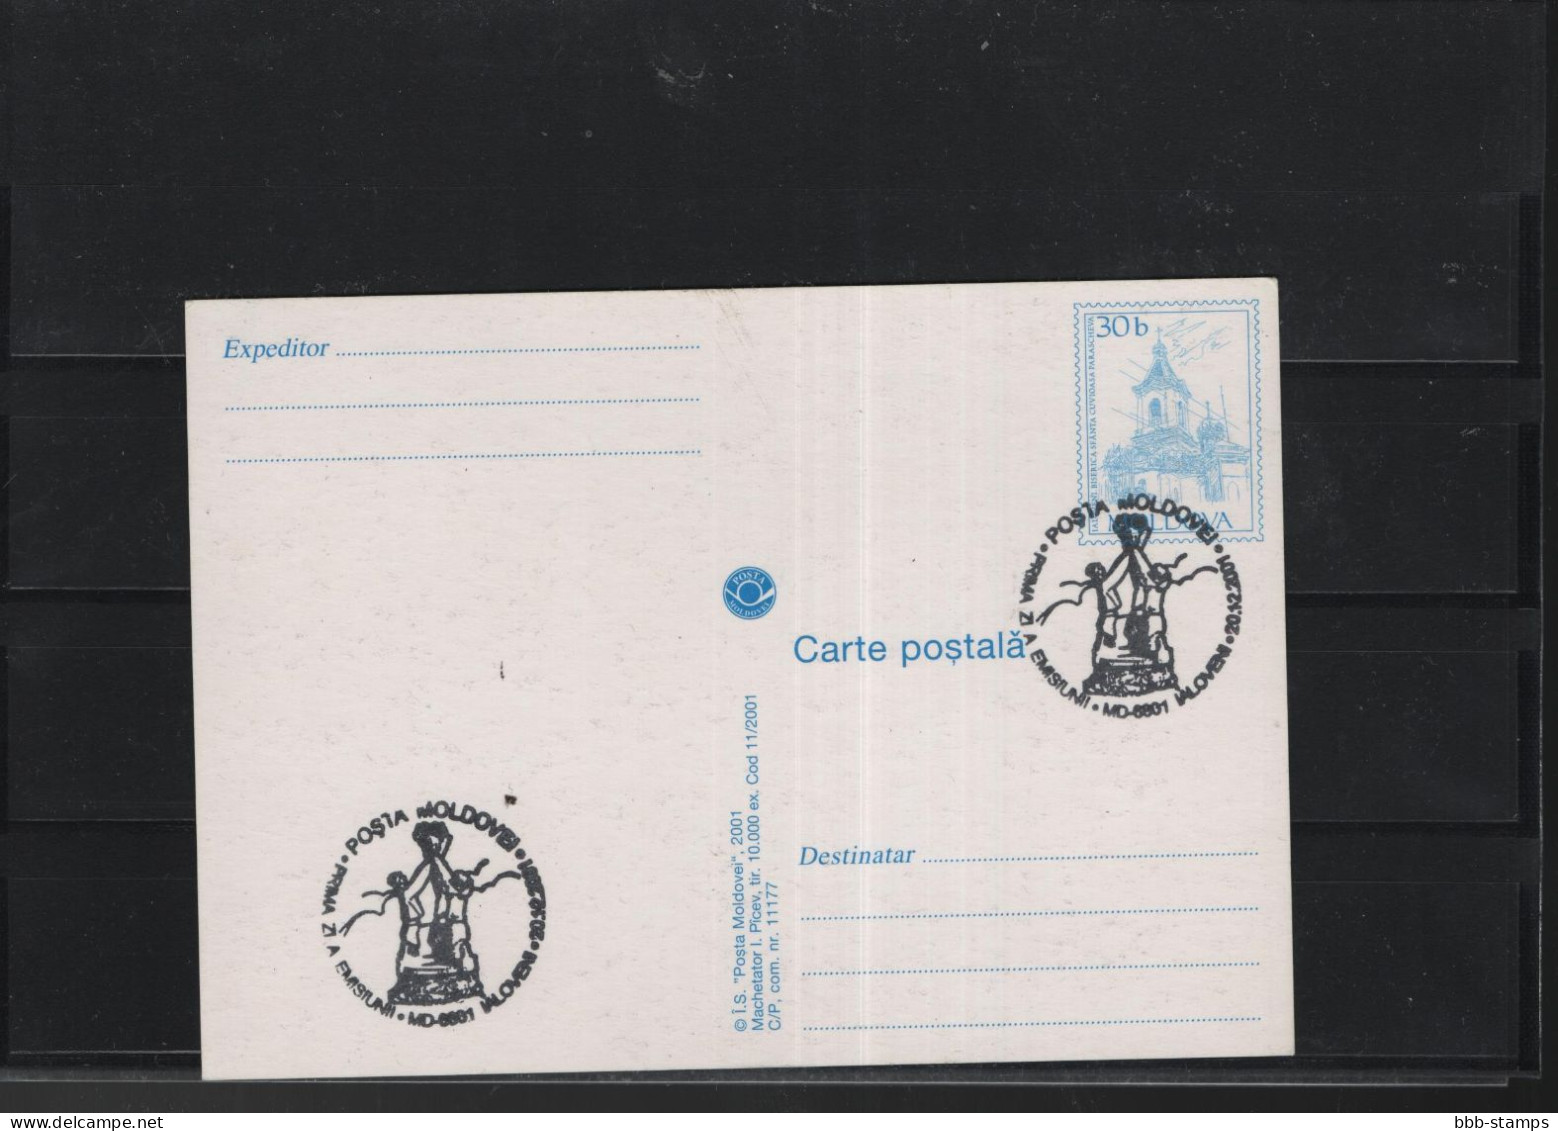 Moldavien Michel Cat.No. Postal Stat  Card Issued  20.12.2001 - Moldova